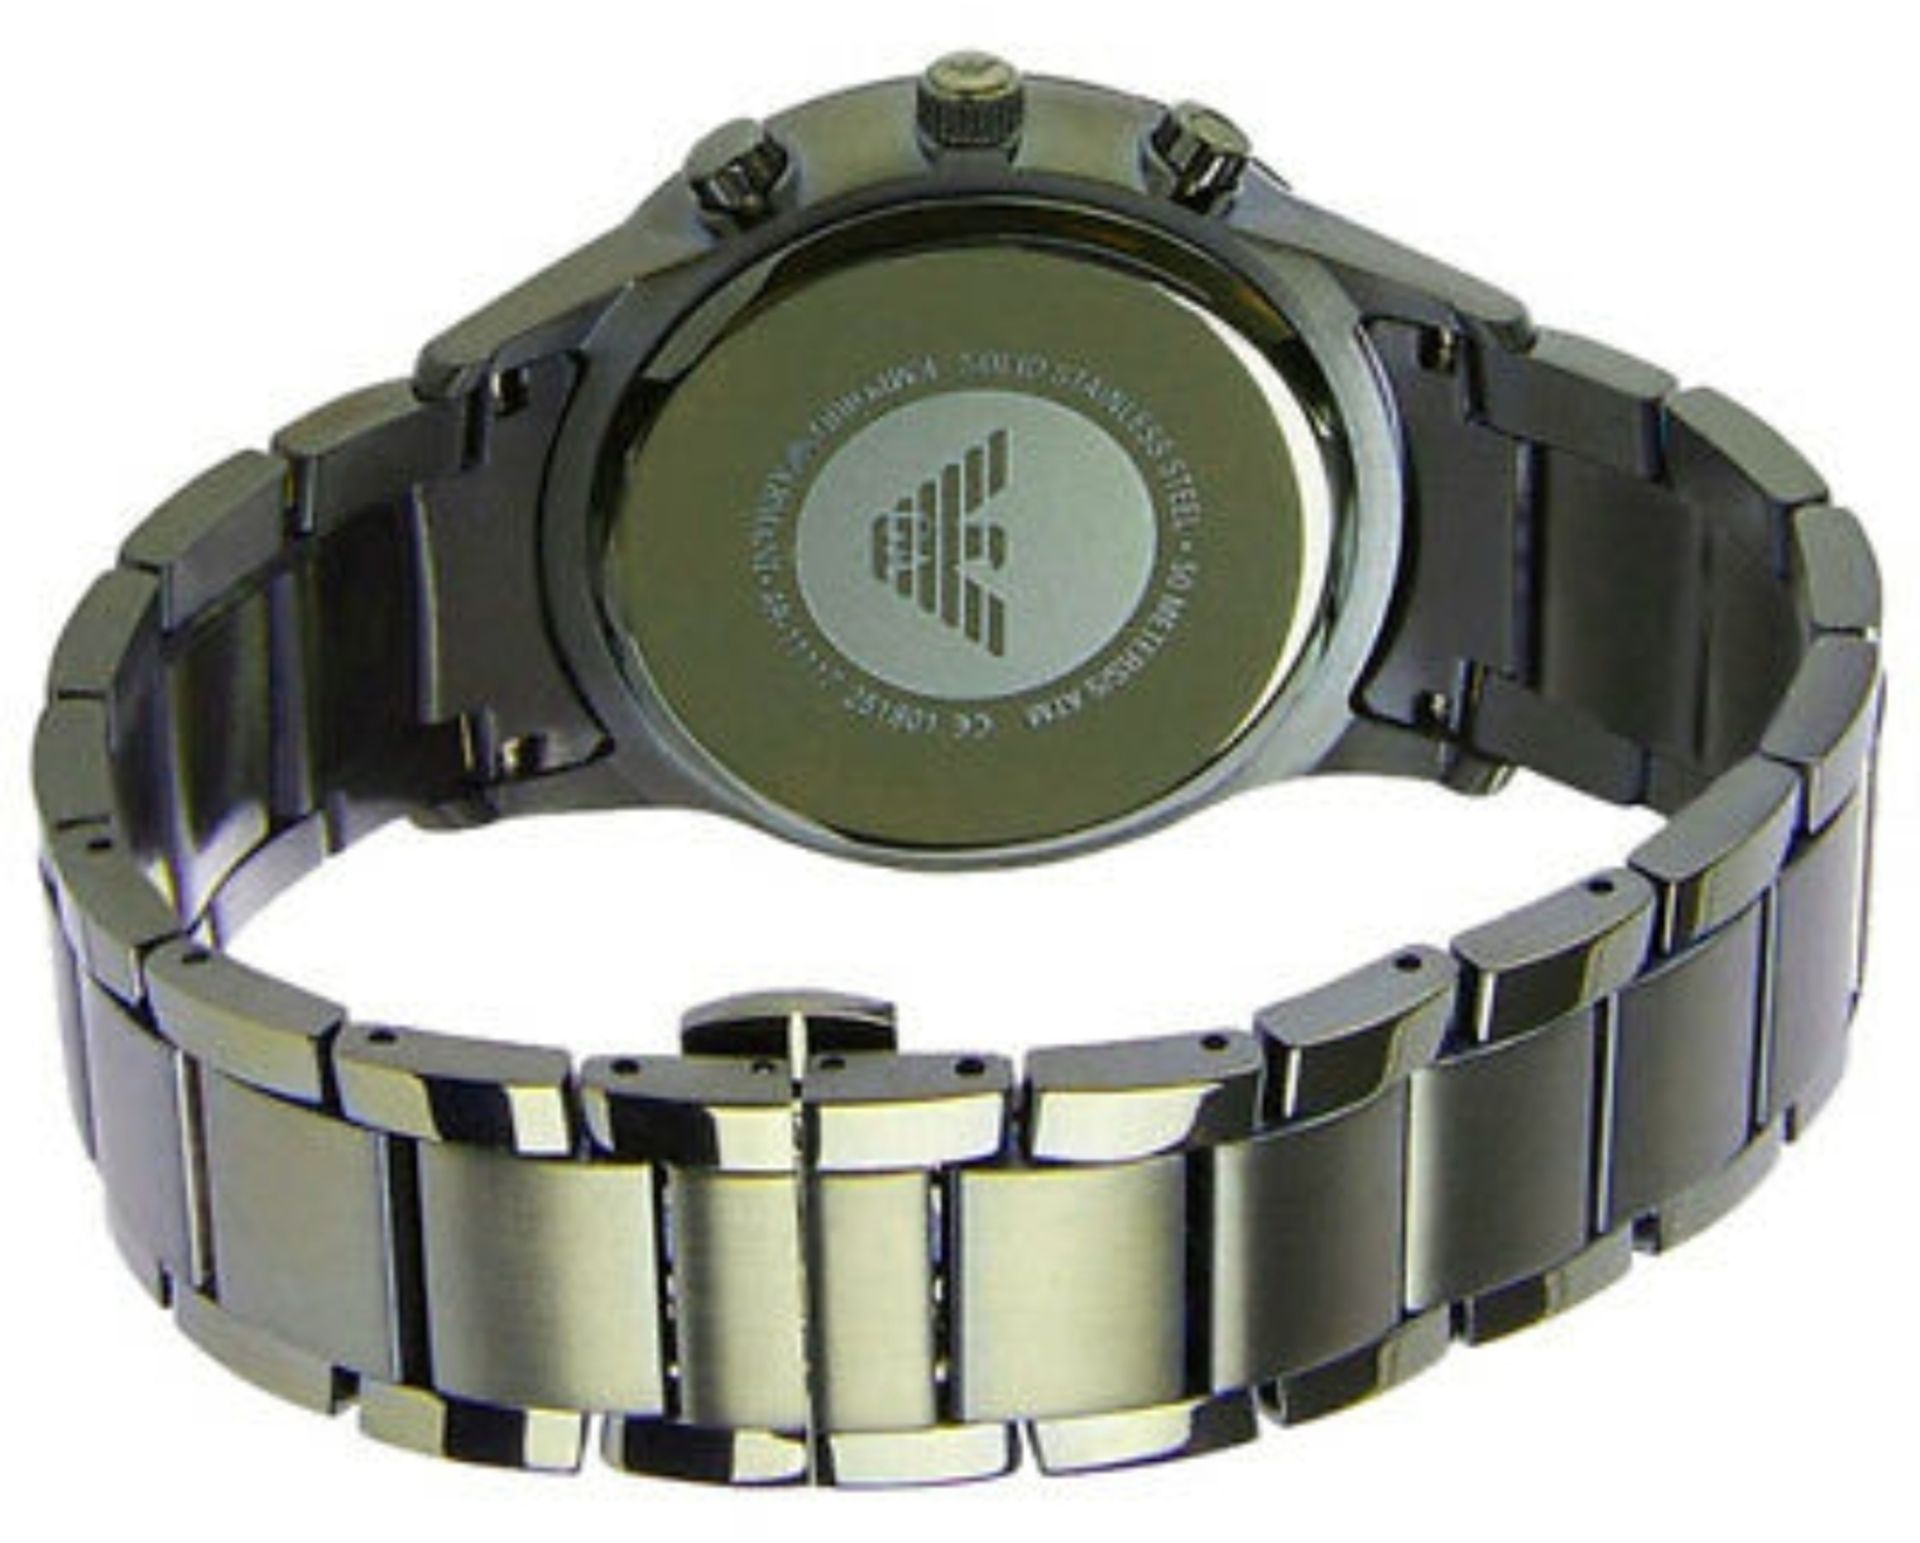 Emporio Armani Ar11117 Men's Khaki Green Link Bracelet Quartz Chronograph Watch - Image 4 of 6